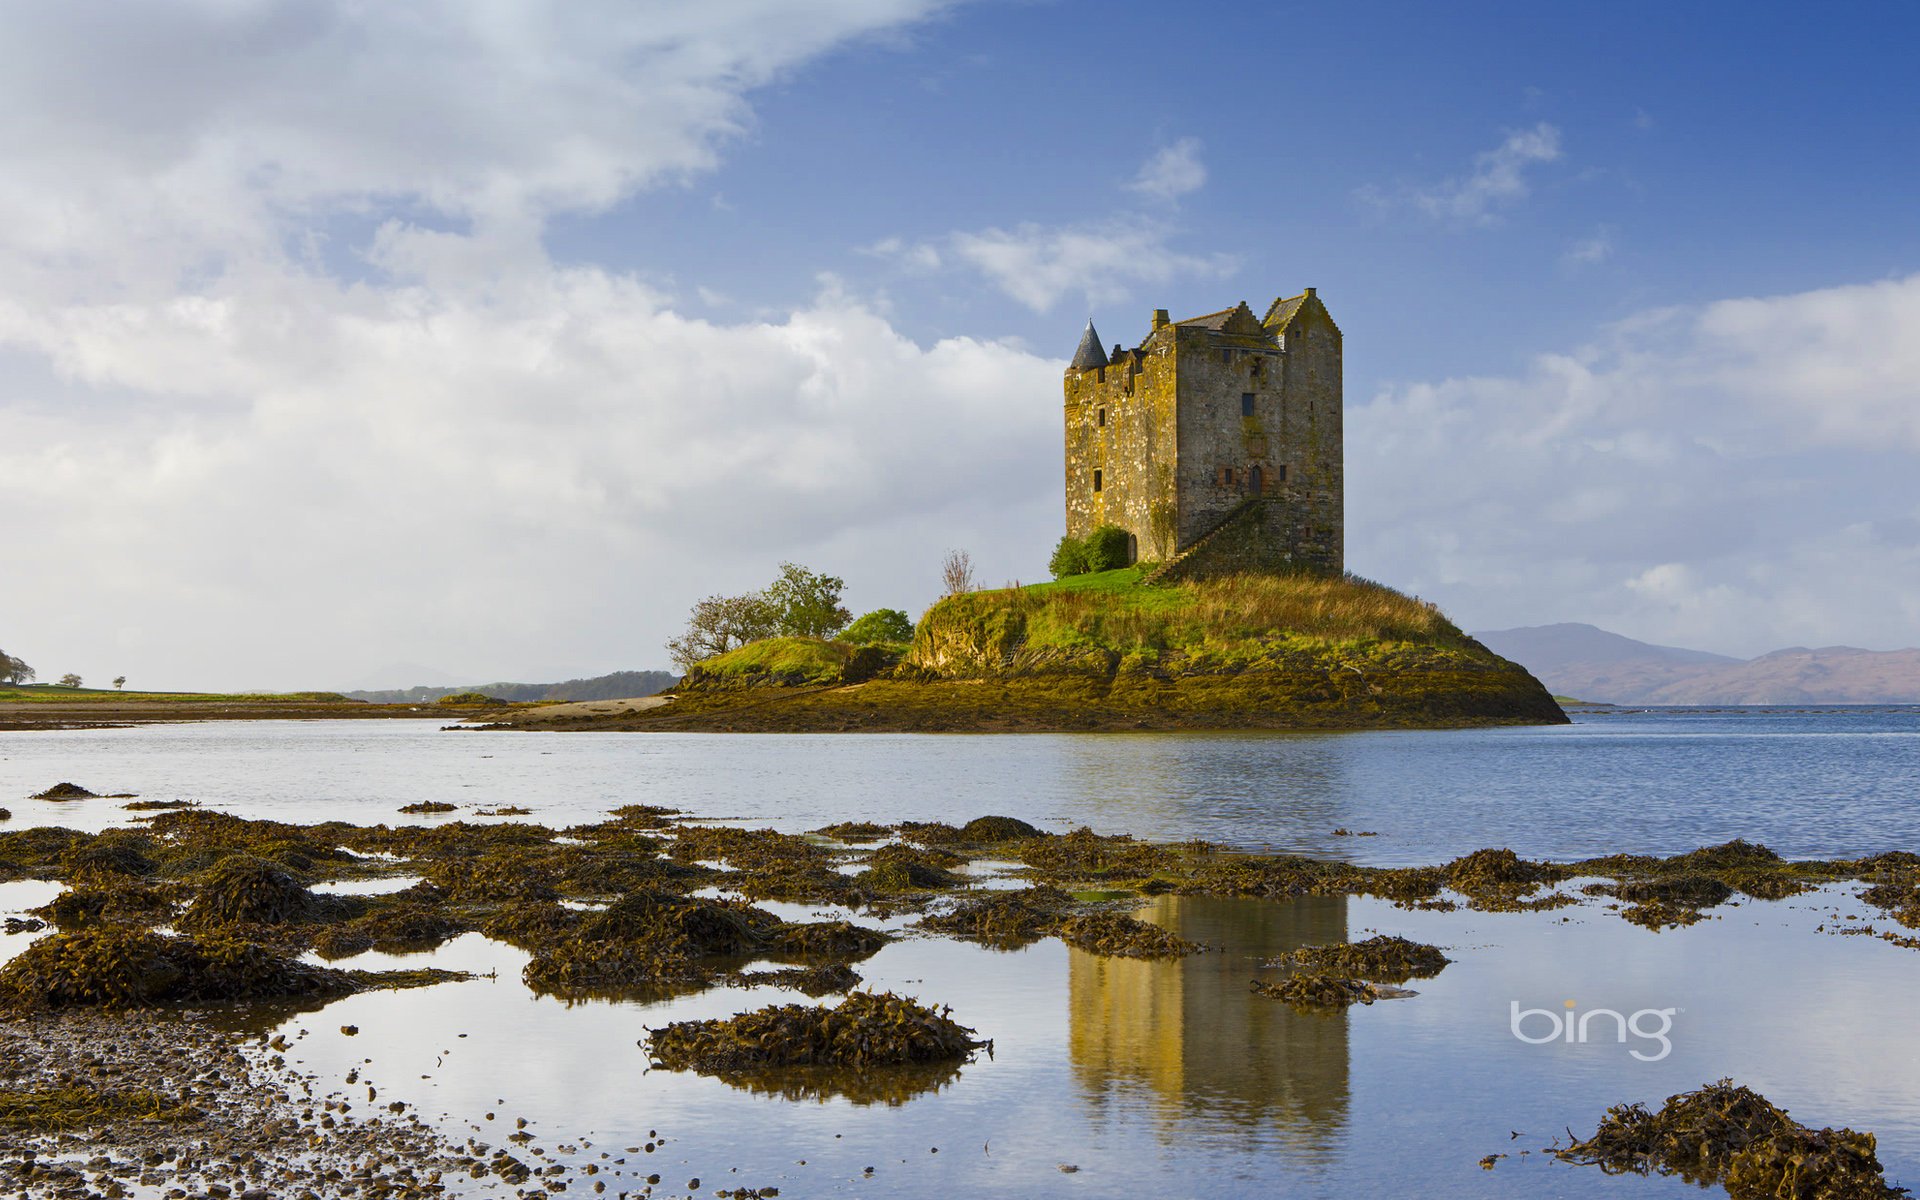  Castle Stalker On An Island In Loch Linnhe Scottish Highlands Scotland 1920x1200